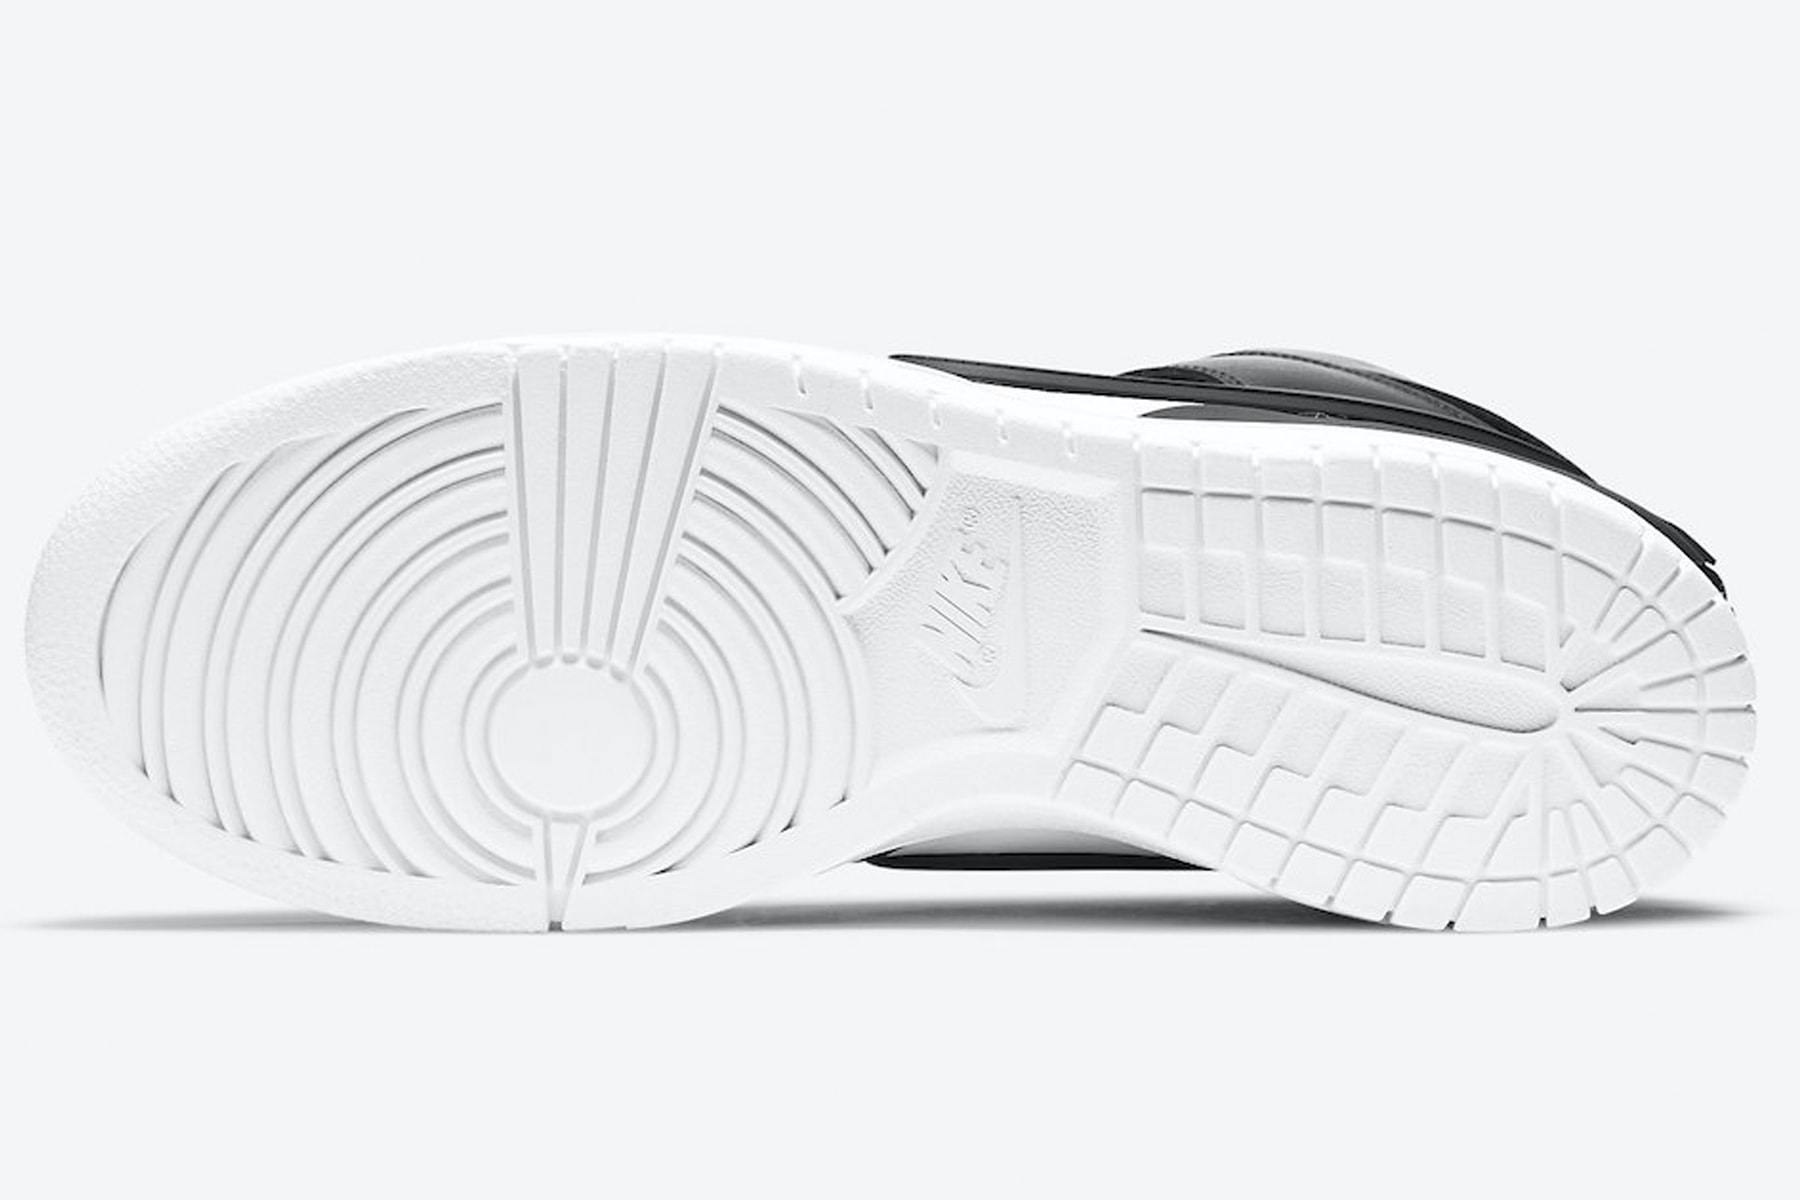 AMBUSH x Nike Dunk High 全新聯乘鞋款黑白配色官方圖輯、發售日期正式公開